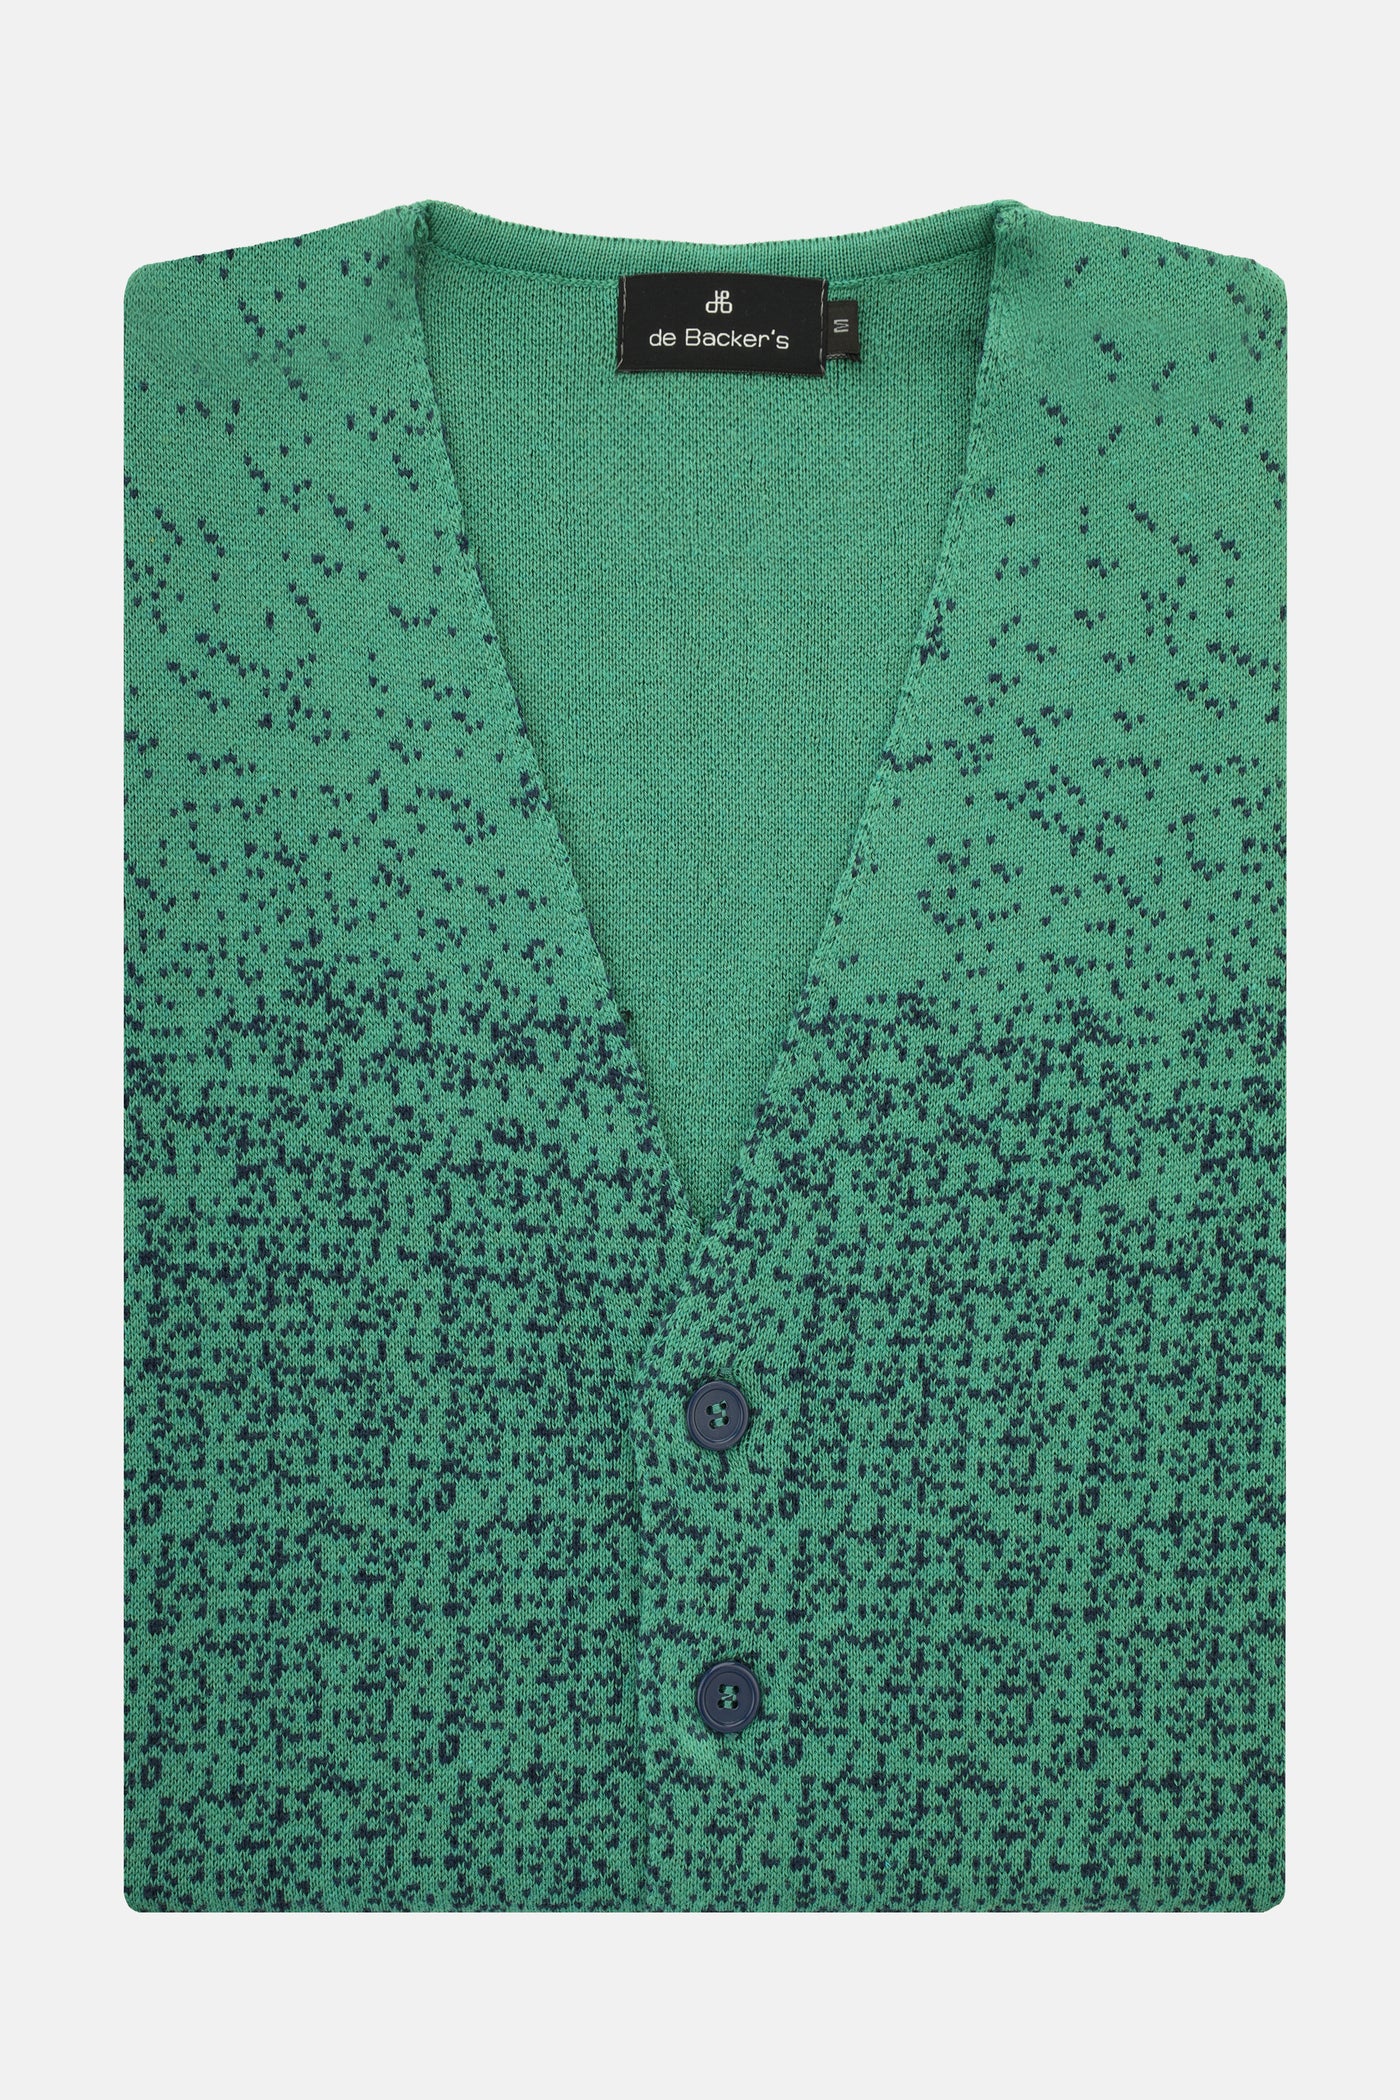 Button up  Jacquard Green Knitwear Vest